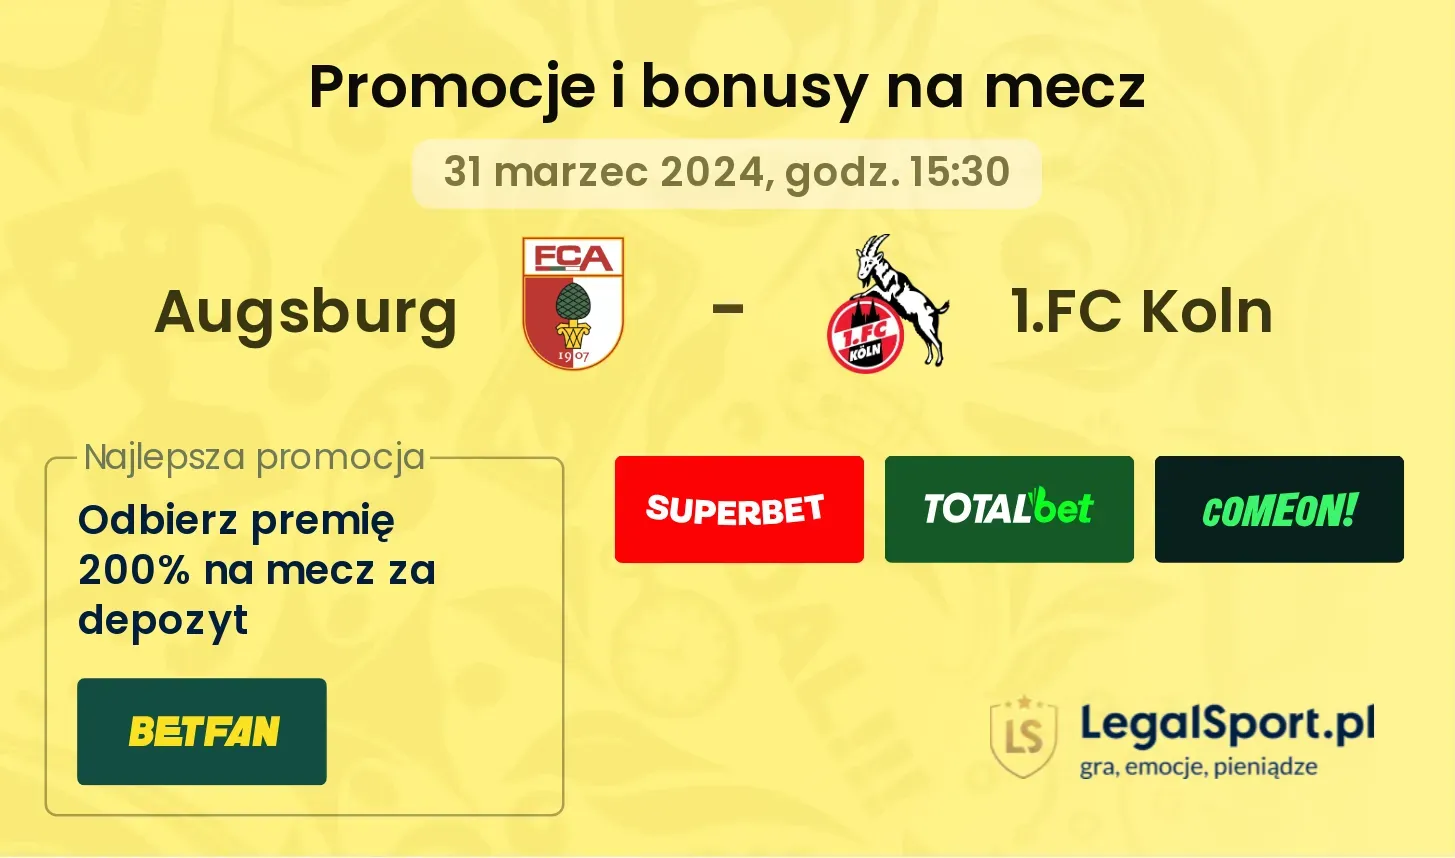 Augsburg - 1.FC Koln promocje bonusy na mecz